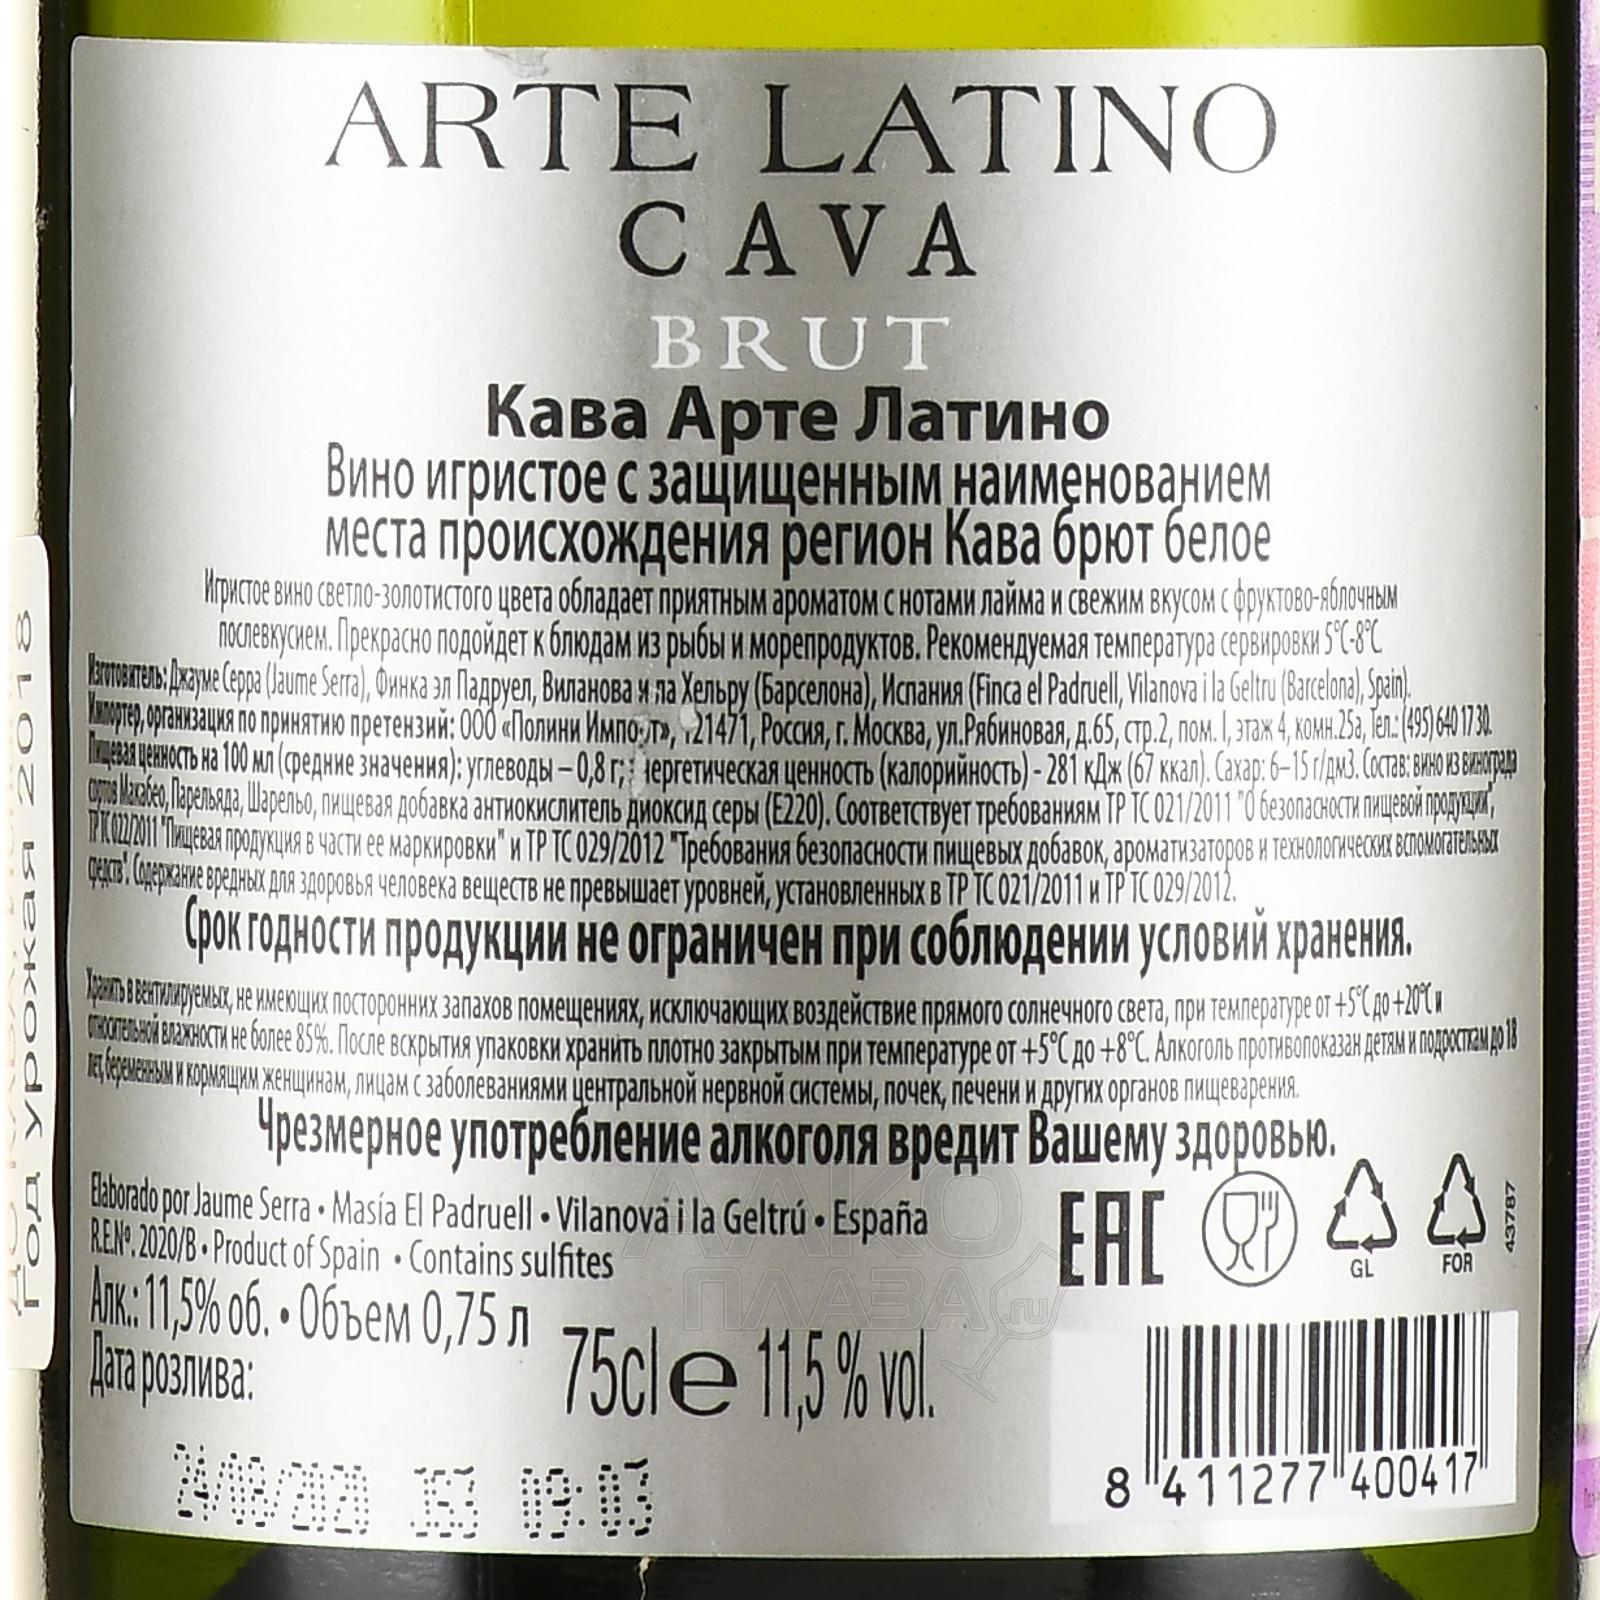 Cava arte latino brut. Вино игристое кава арте латино. Шампанское Brut Arte Latino.